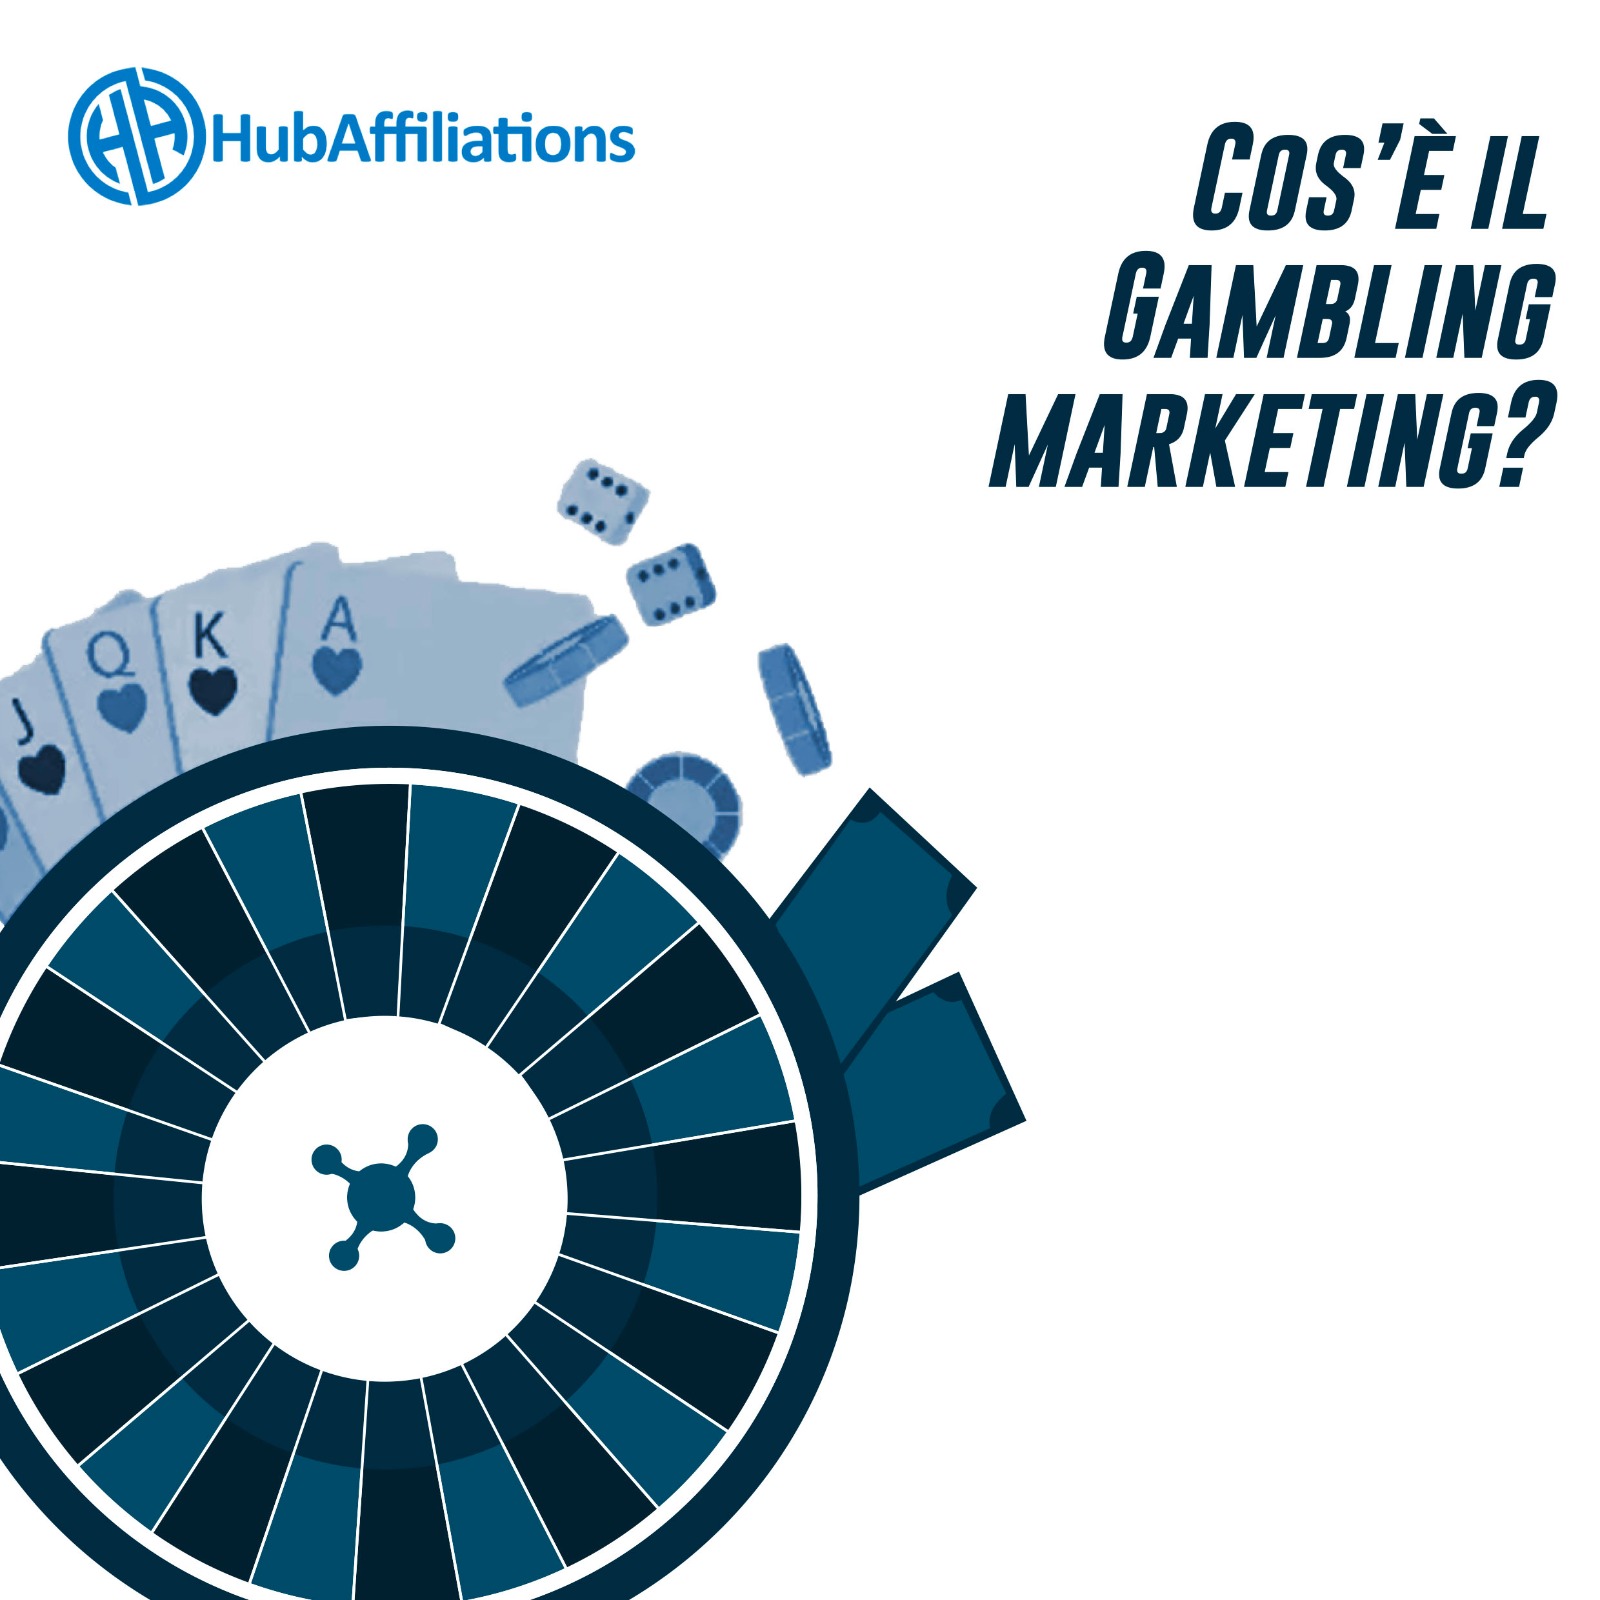 Cos'� il Gambling Marketing?